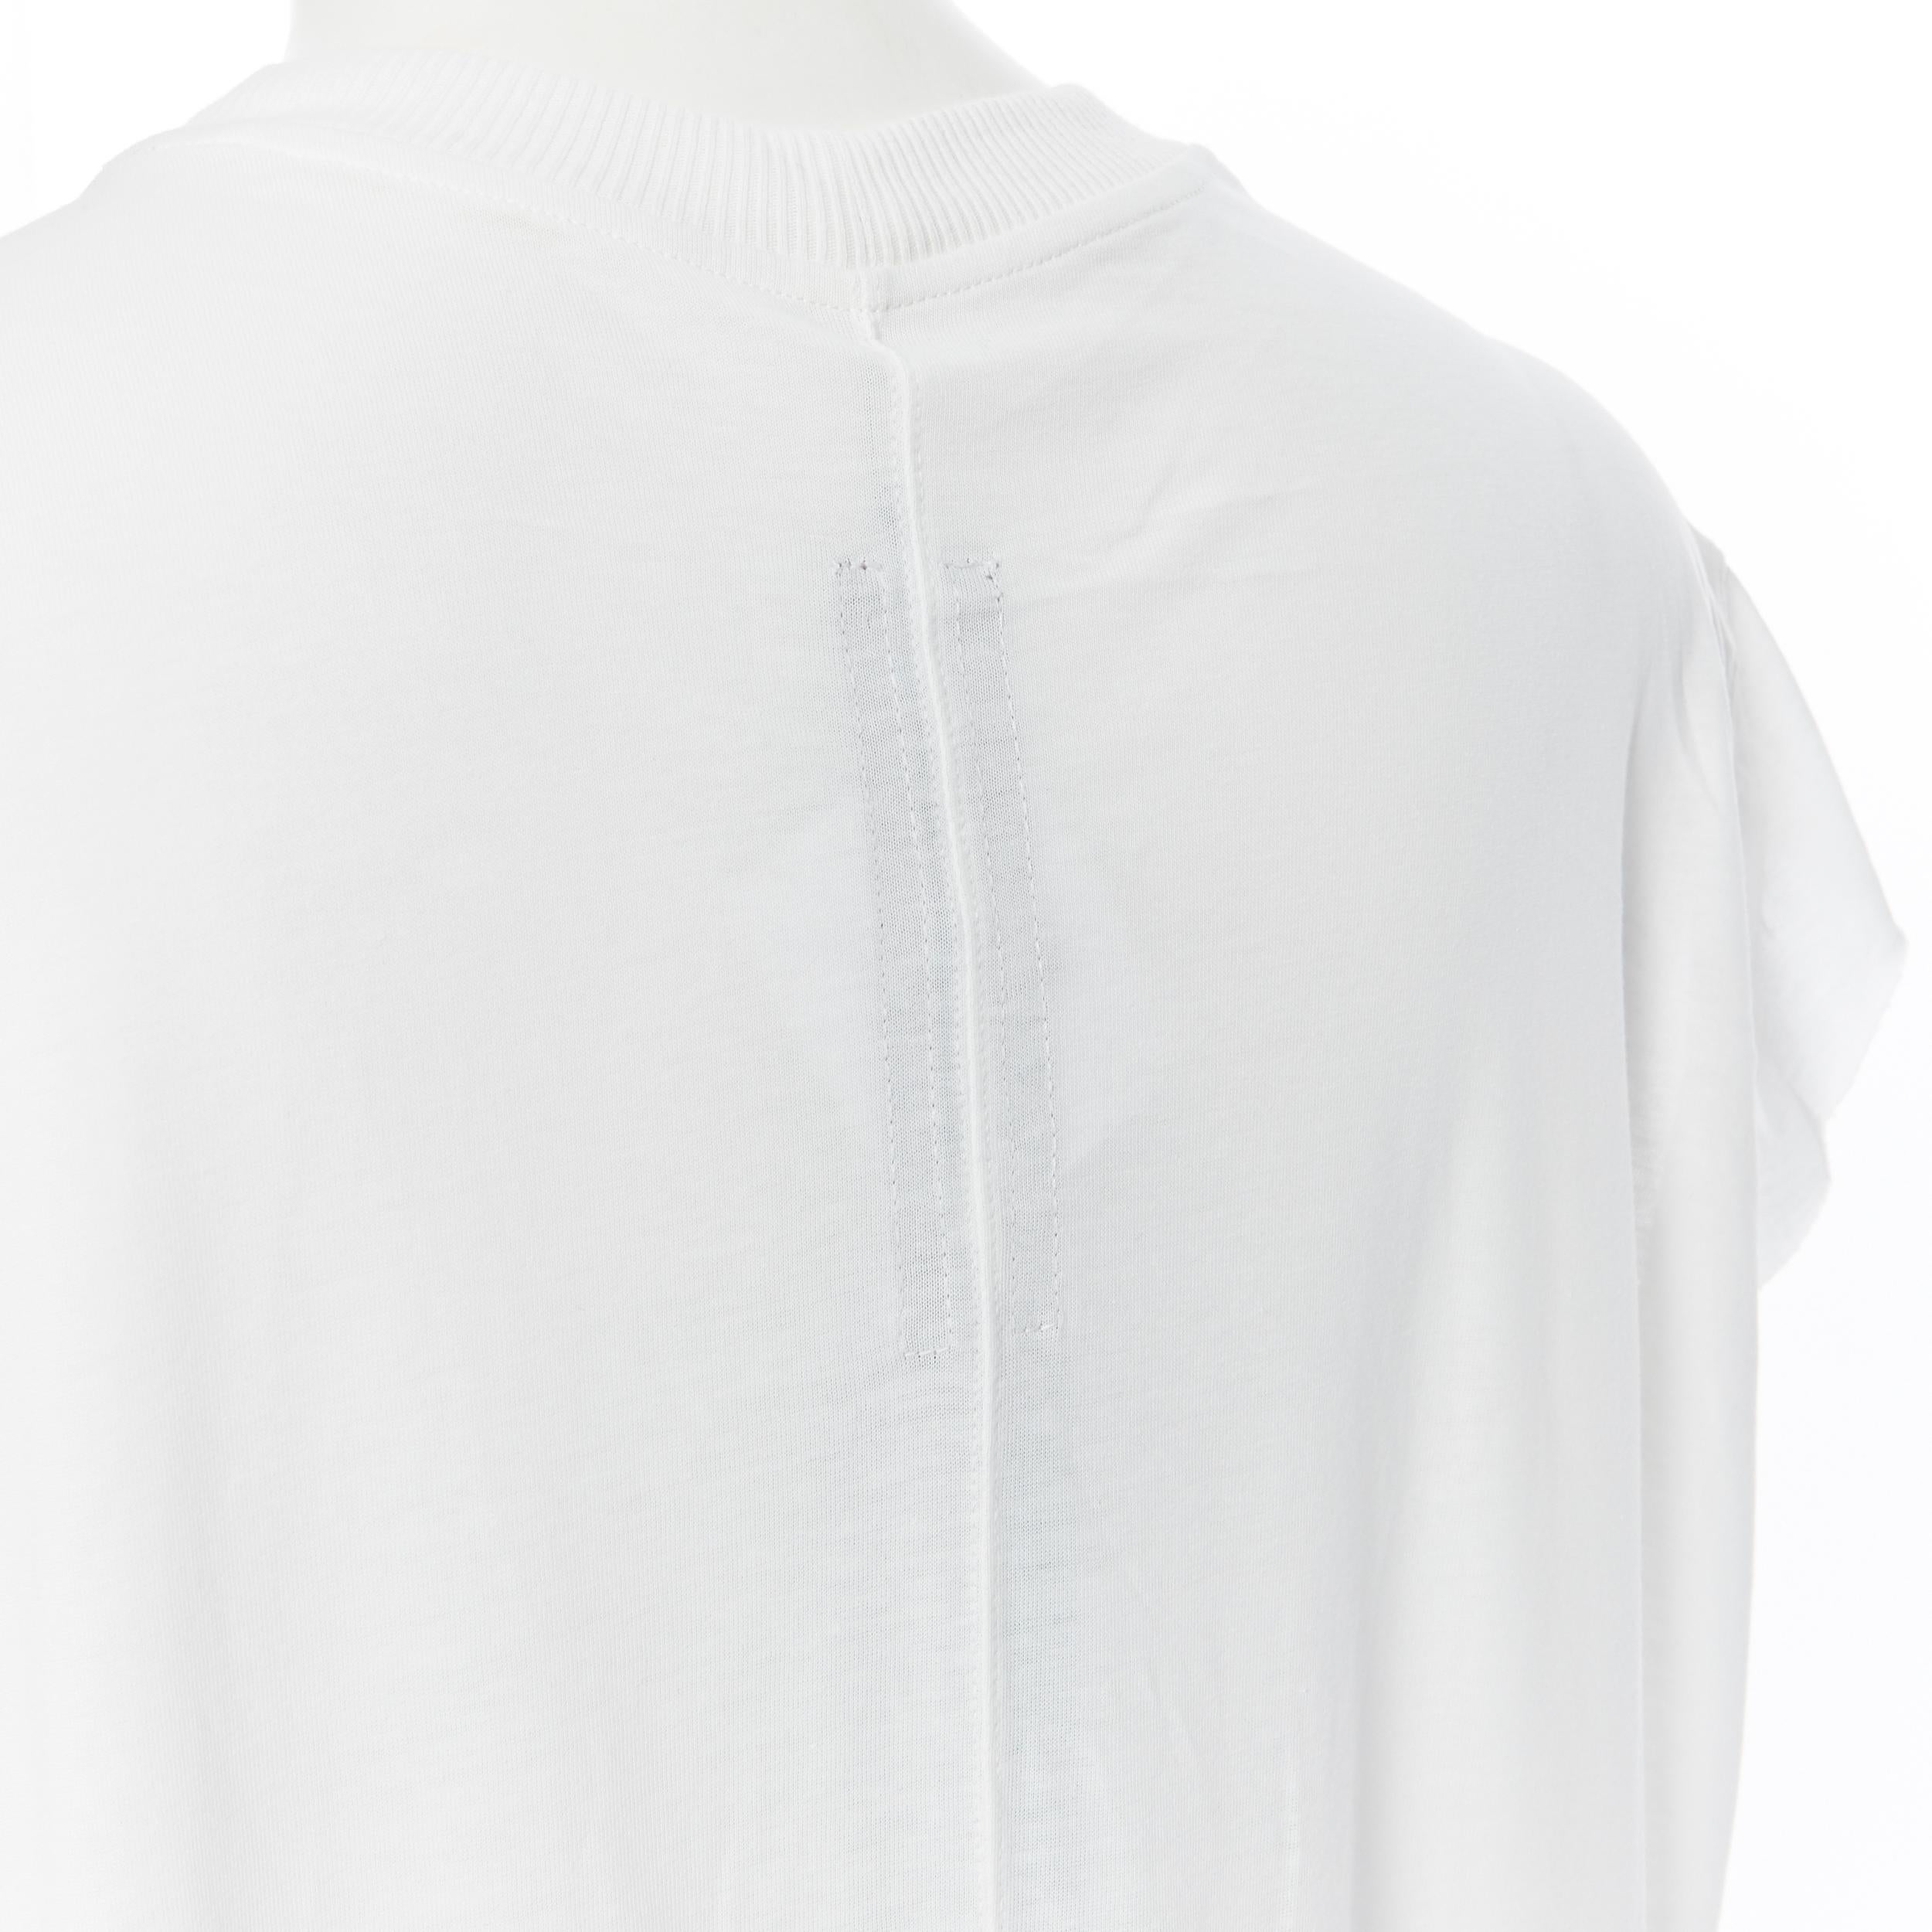 new RICK OWENS DRKSHDW SS18 Dirt Jumbo white black photo print t-shirt dress OS 3